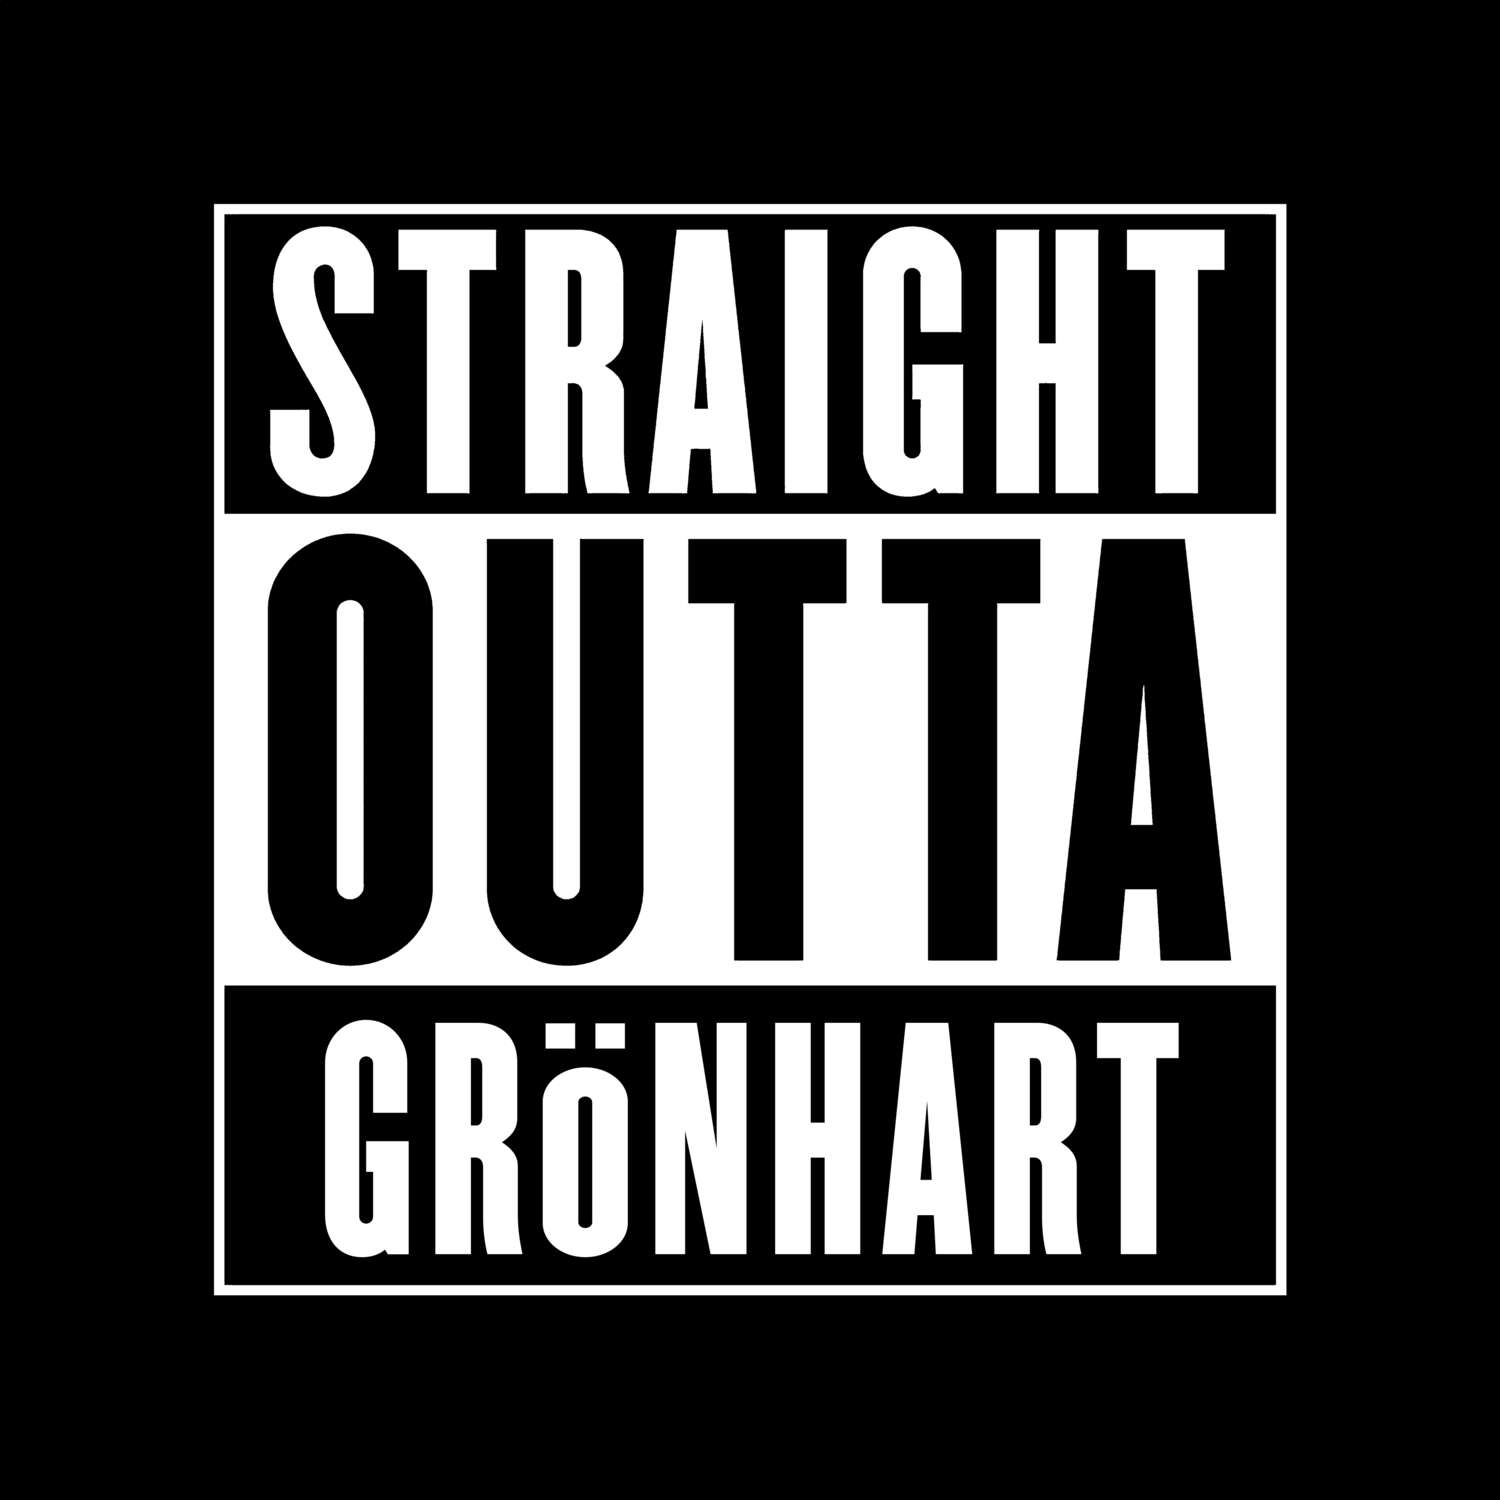 Grönhart T-Shirt »Straight Outta«